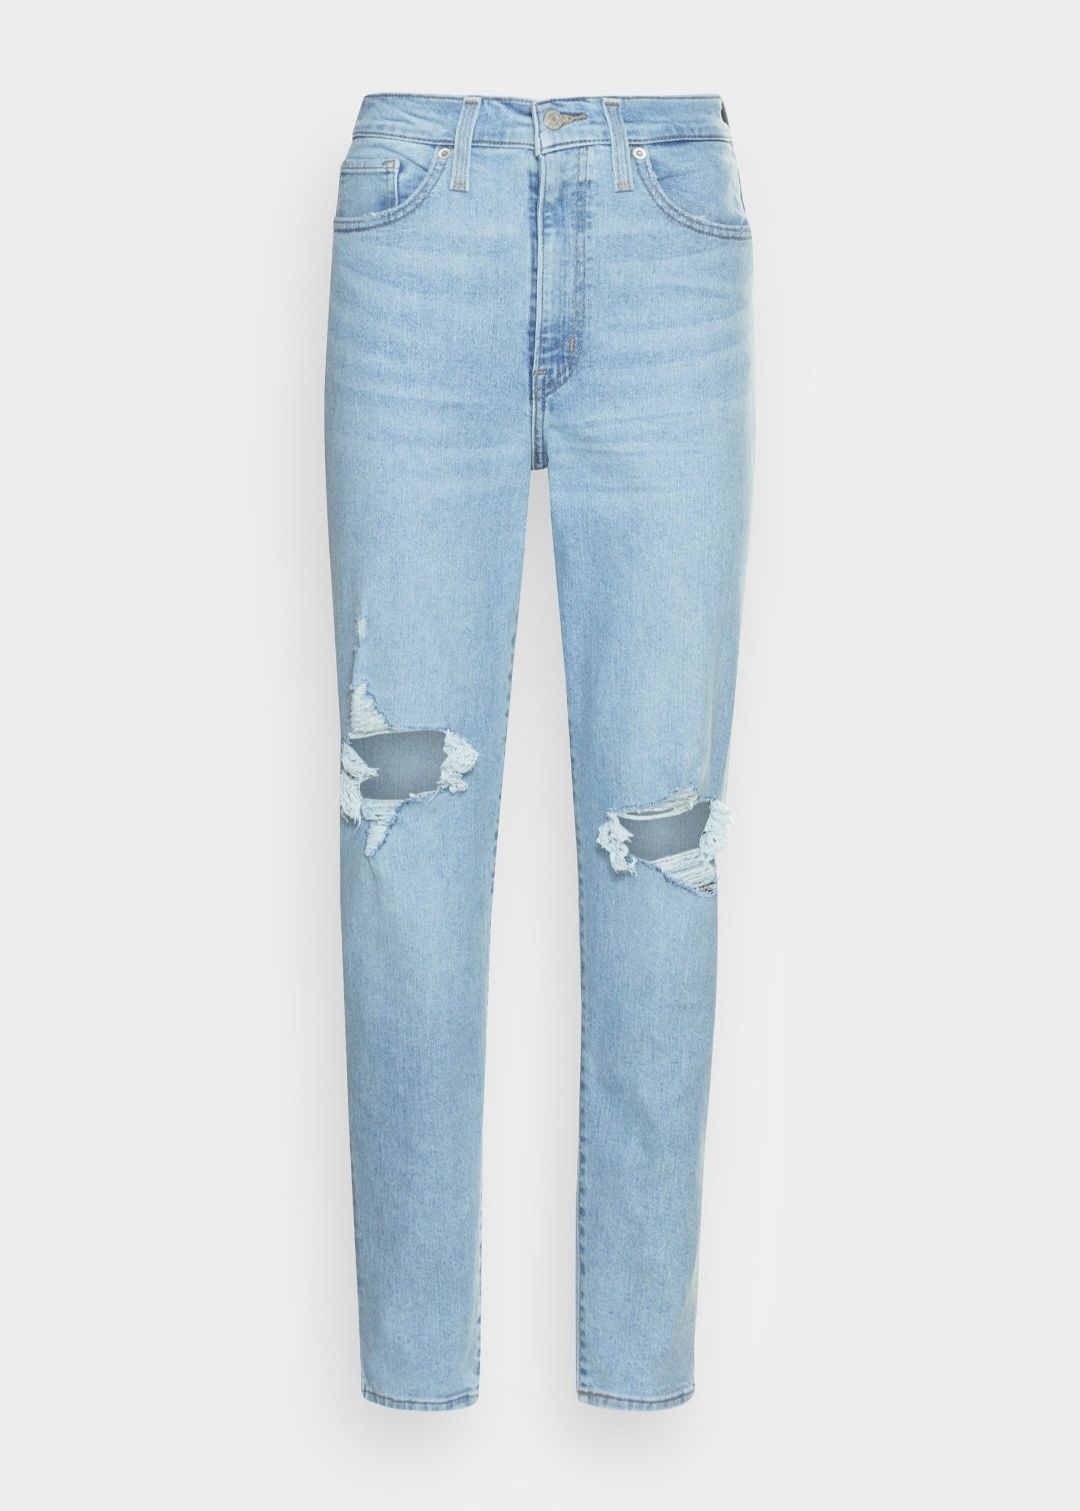 Jeansy dżinsy Levi's High Waisted Mom Jeans roz. 29x27